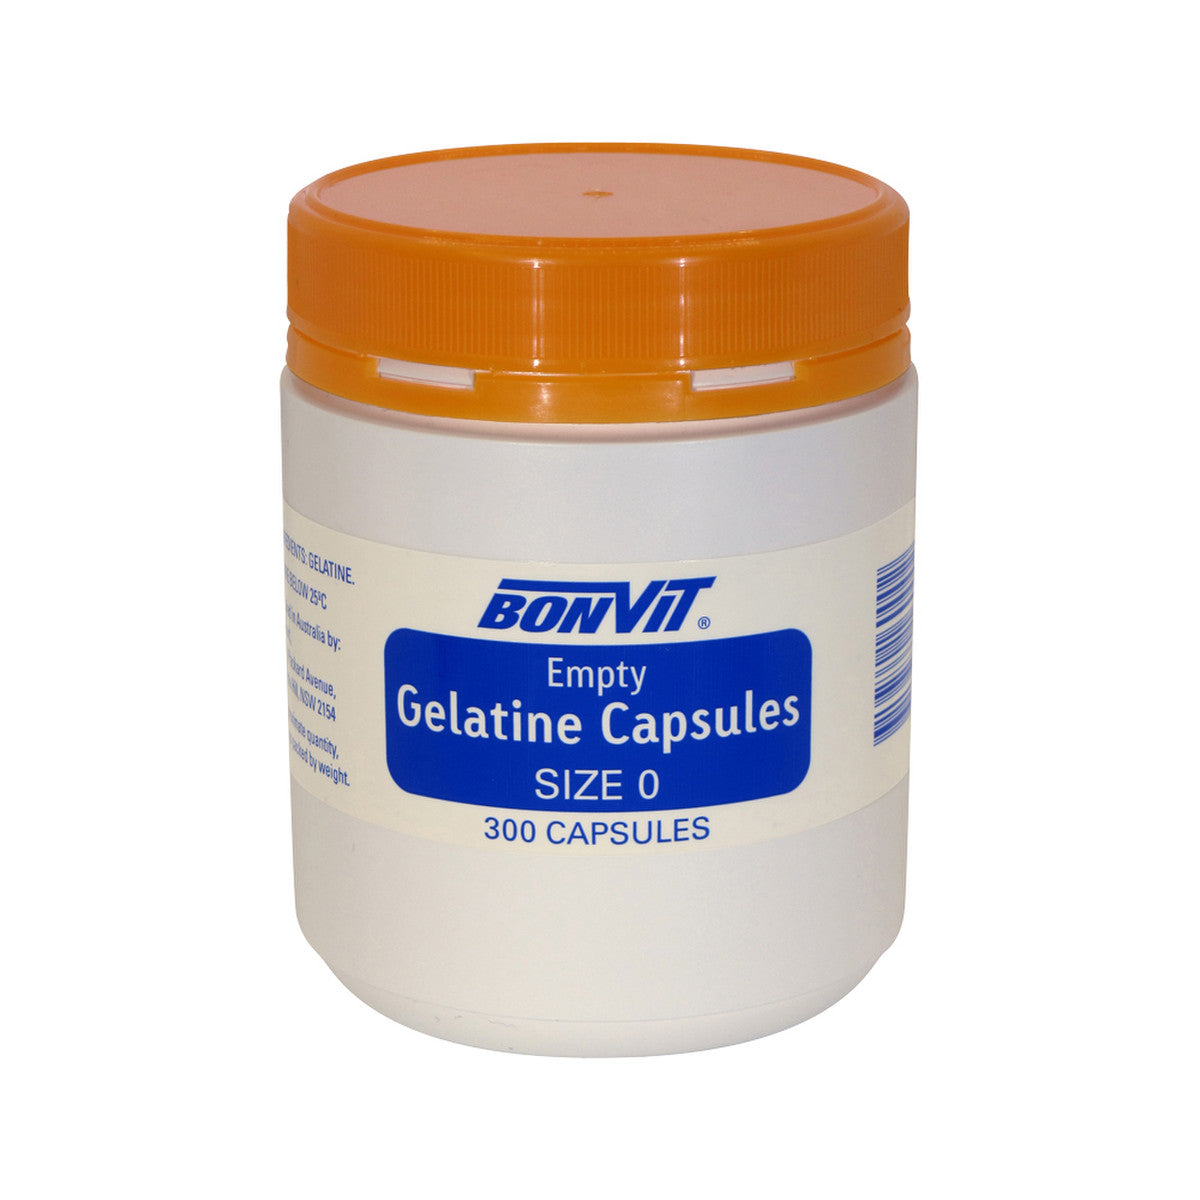 Bonvit - Empty Gelatine Capsules Size '0'